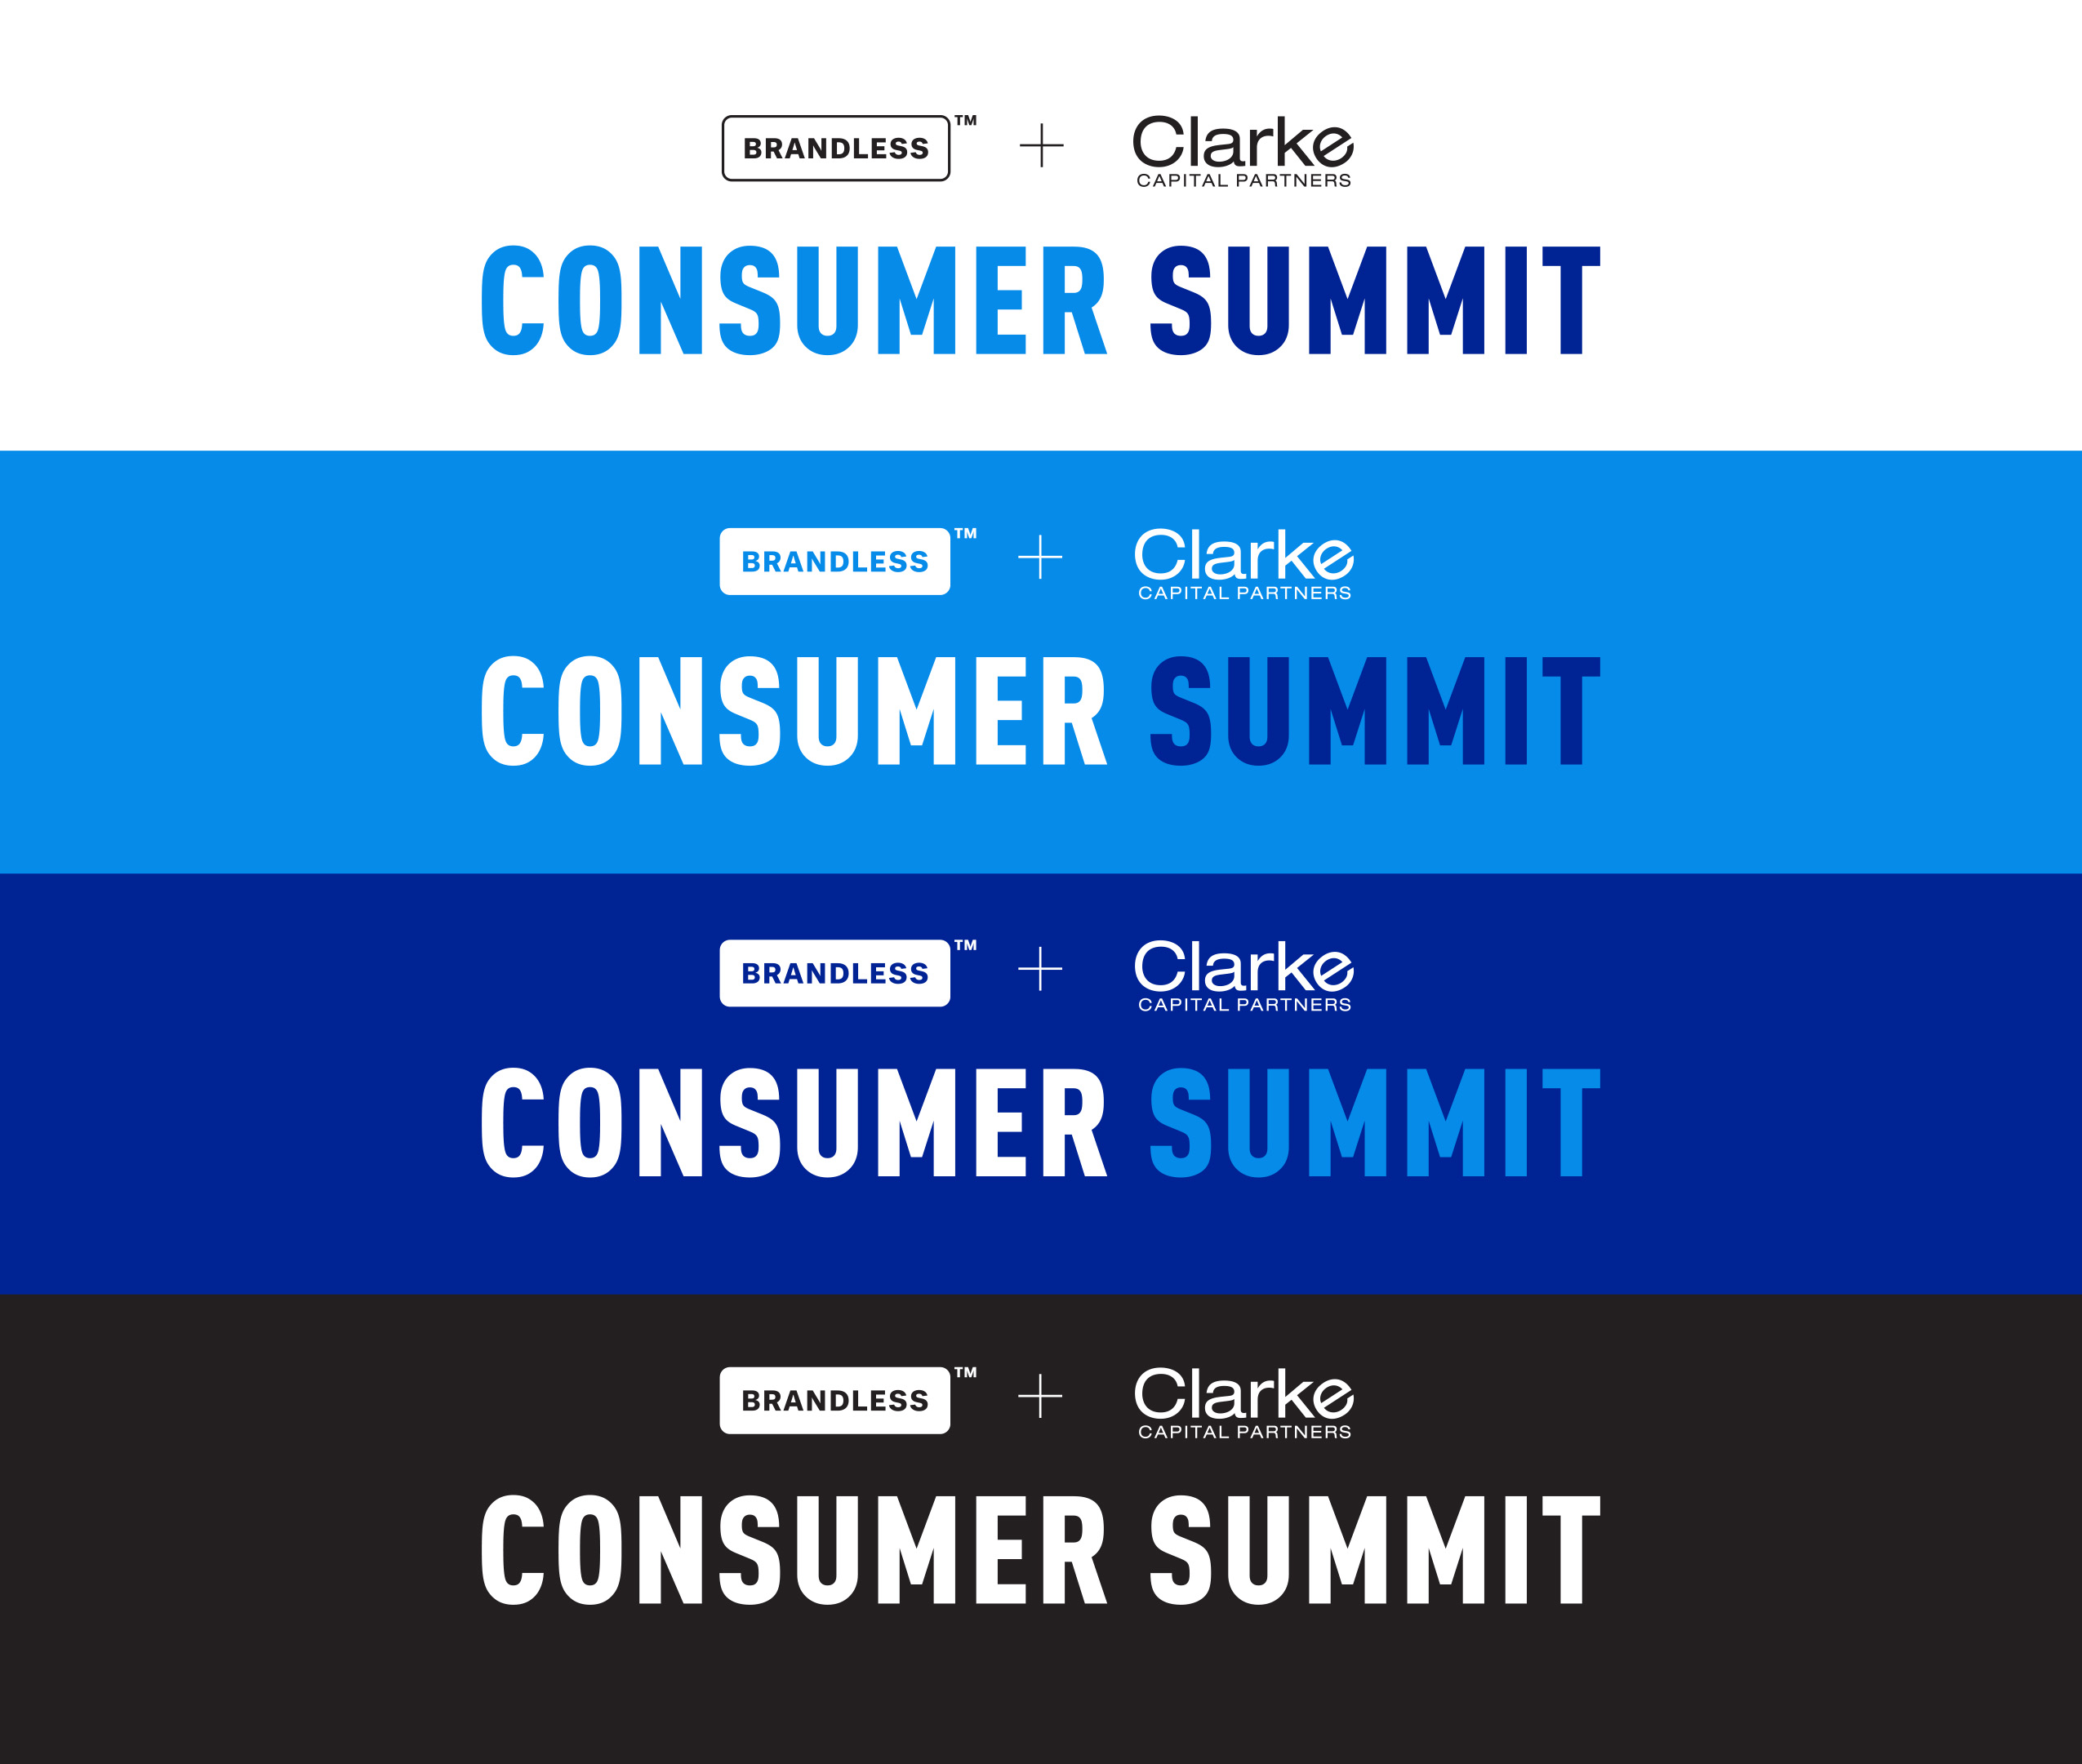 Brandless and Clarke Capital Partners present Consumer Summit